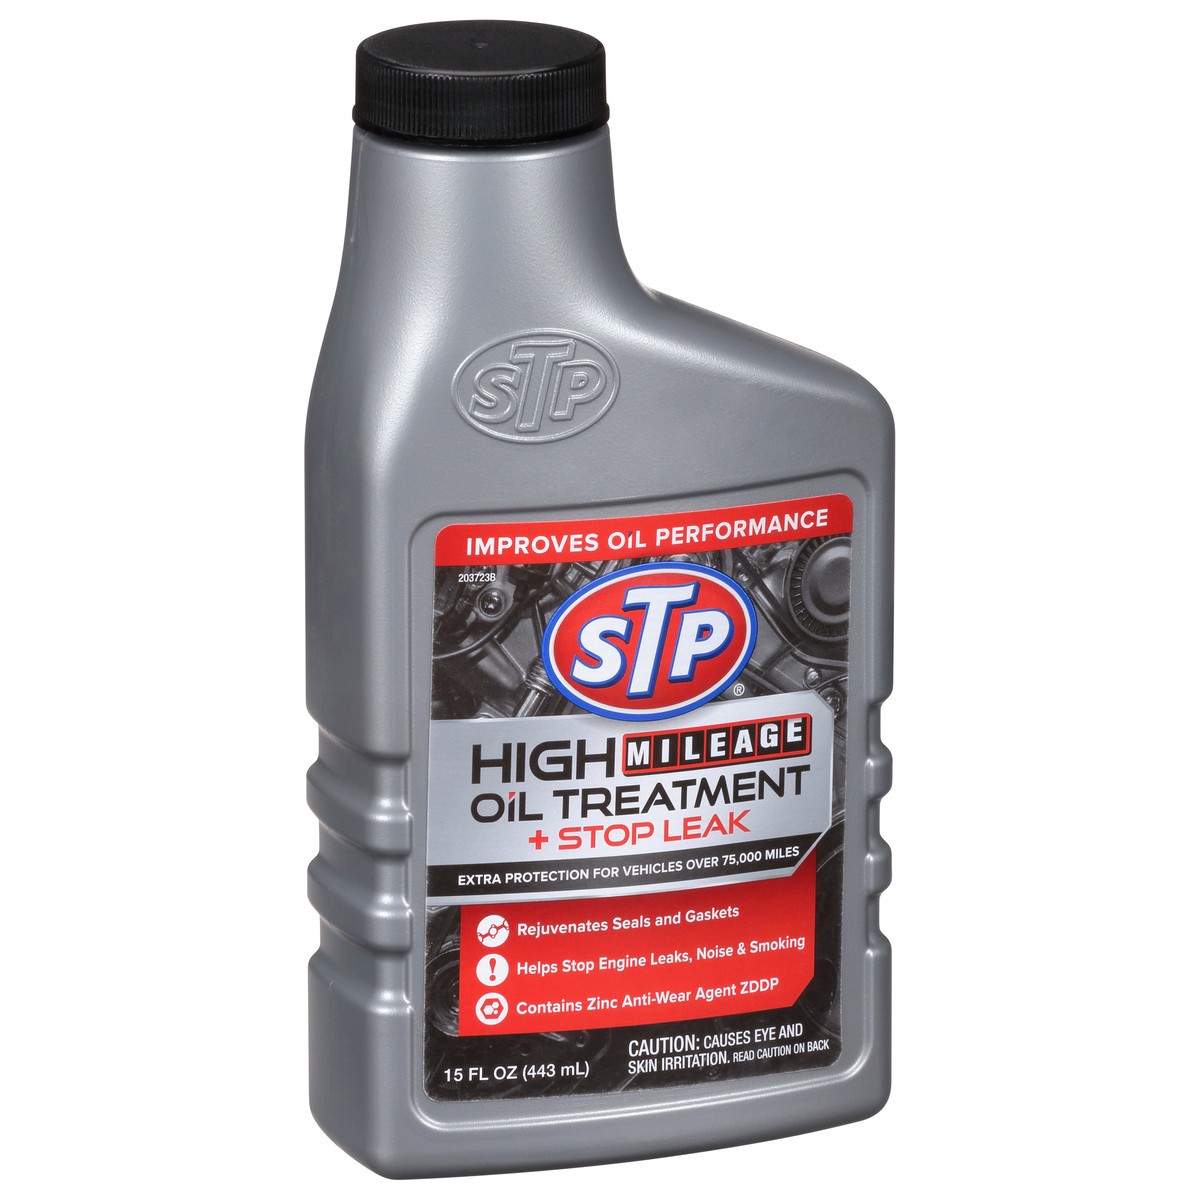 slide 2 of 9, STP High Mileage Oil Treatment + Stop Leak - 15 FL OZ, 15 fl oz